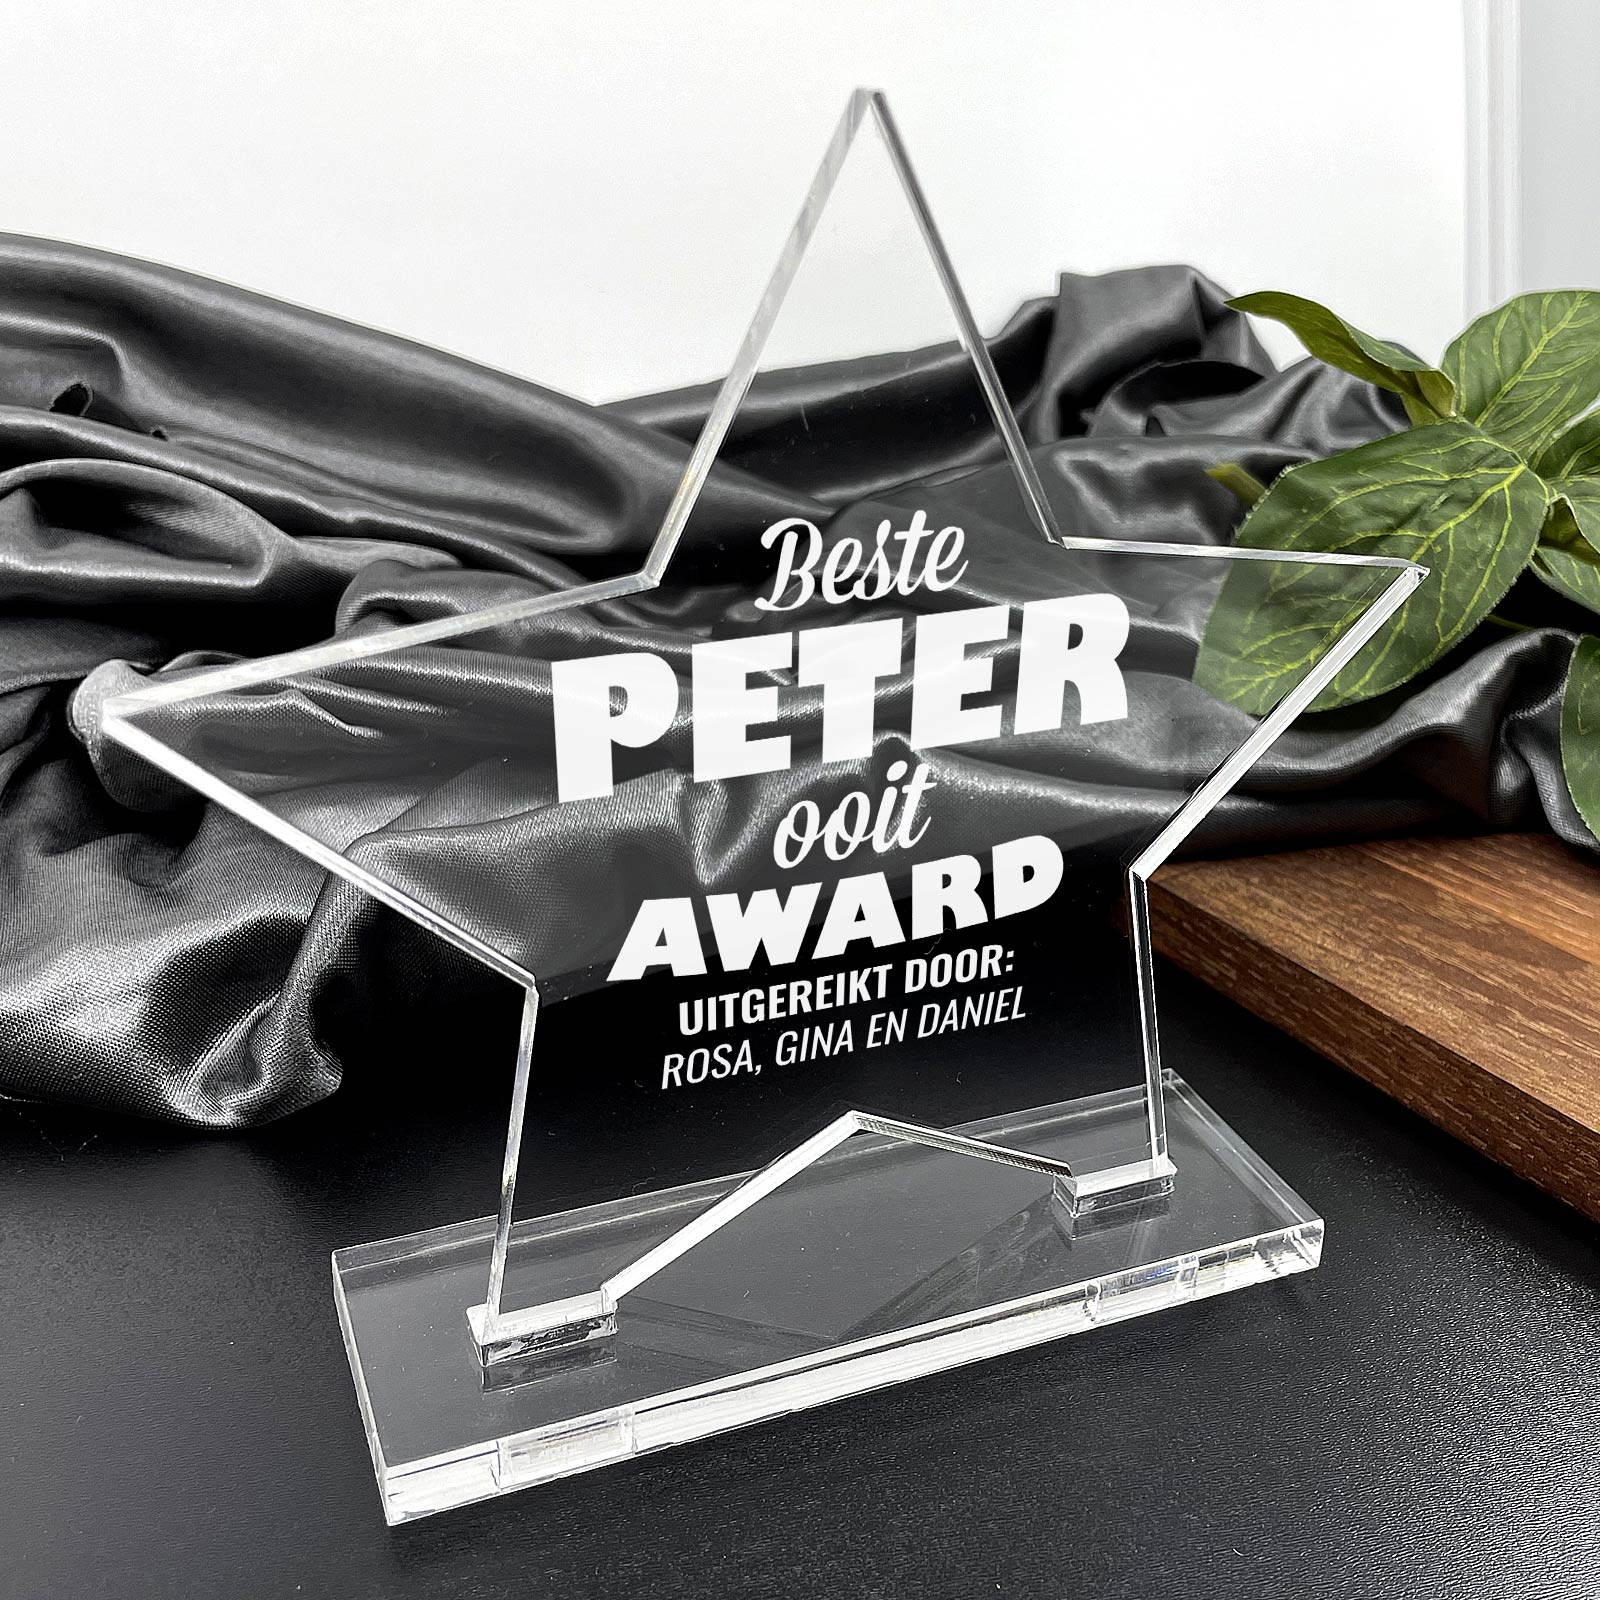 Beste Peter Ooit Award - Bella Mia